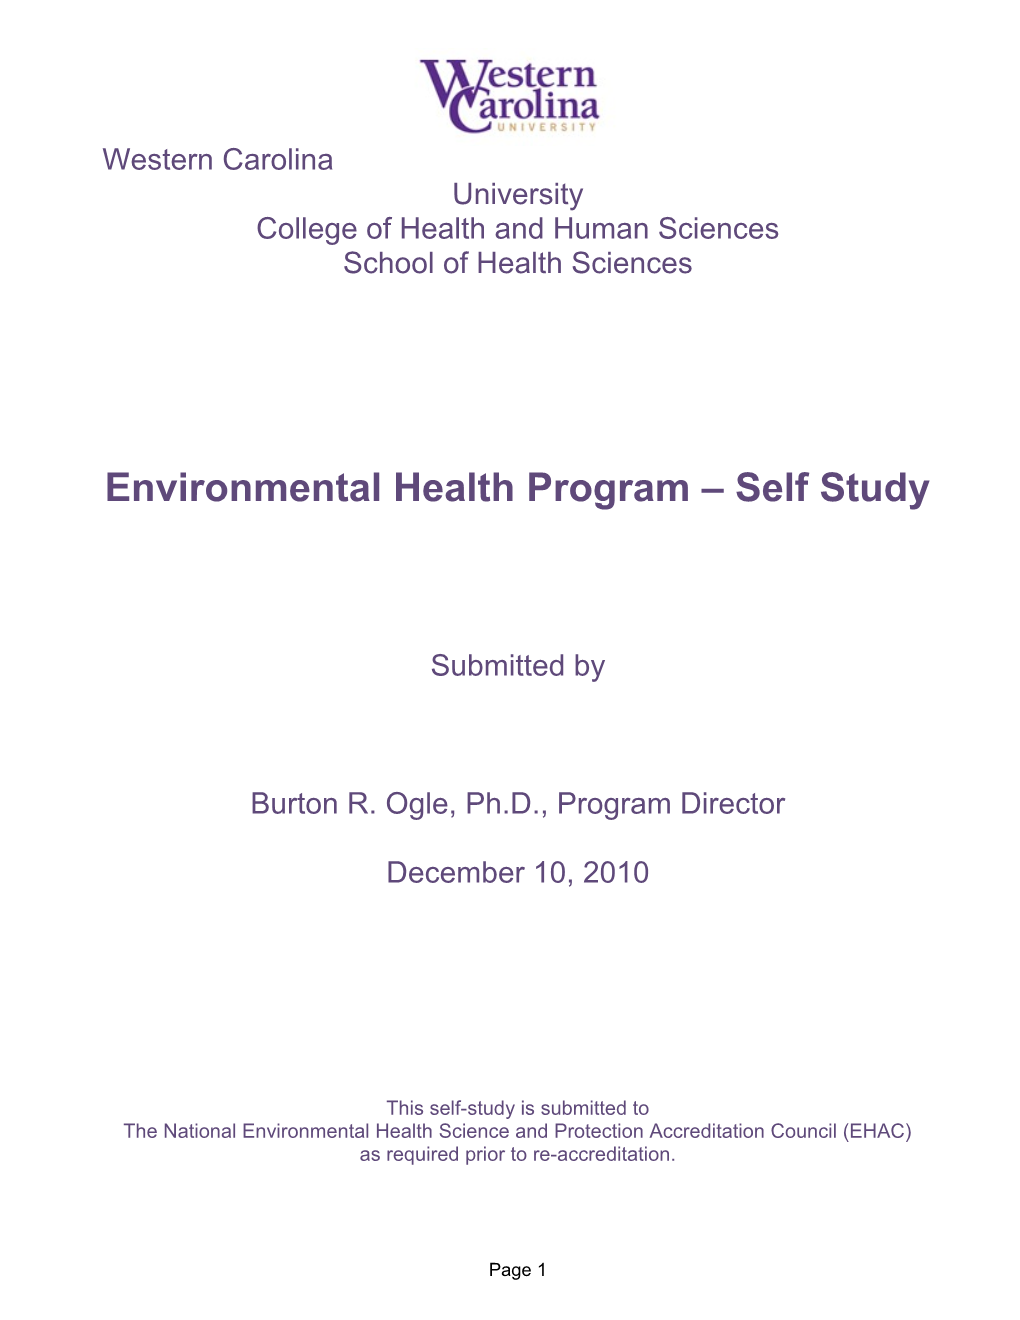 Environmental Health Program Self Study